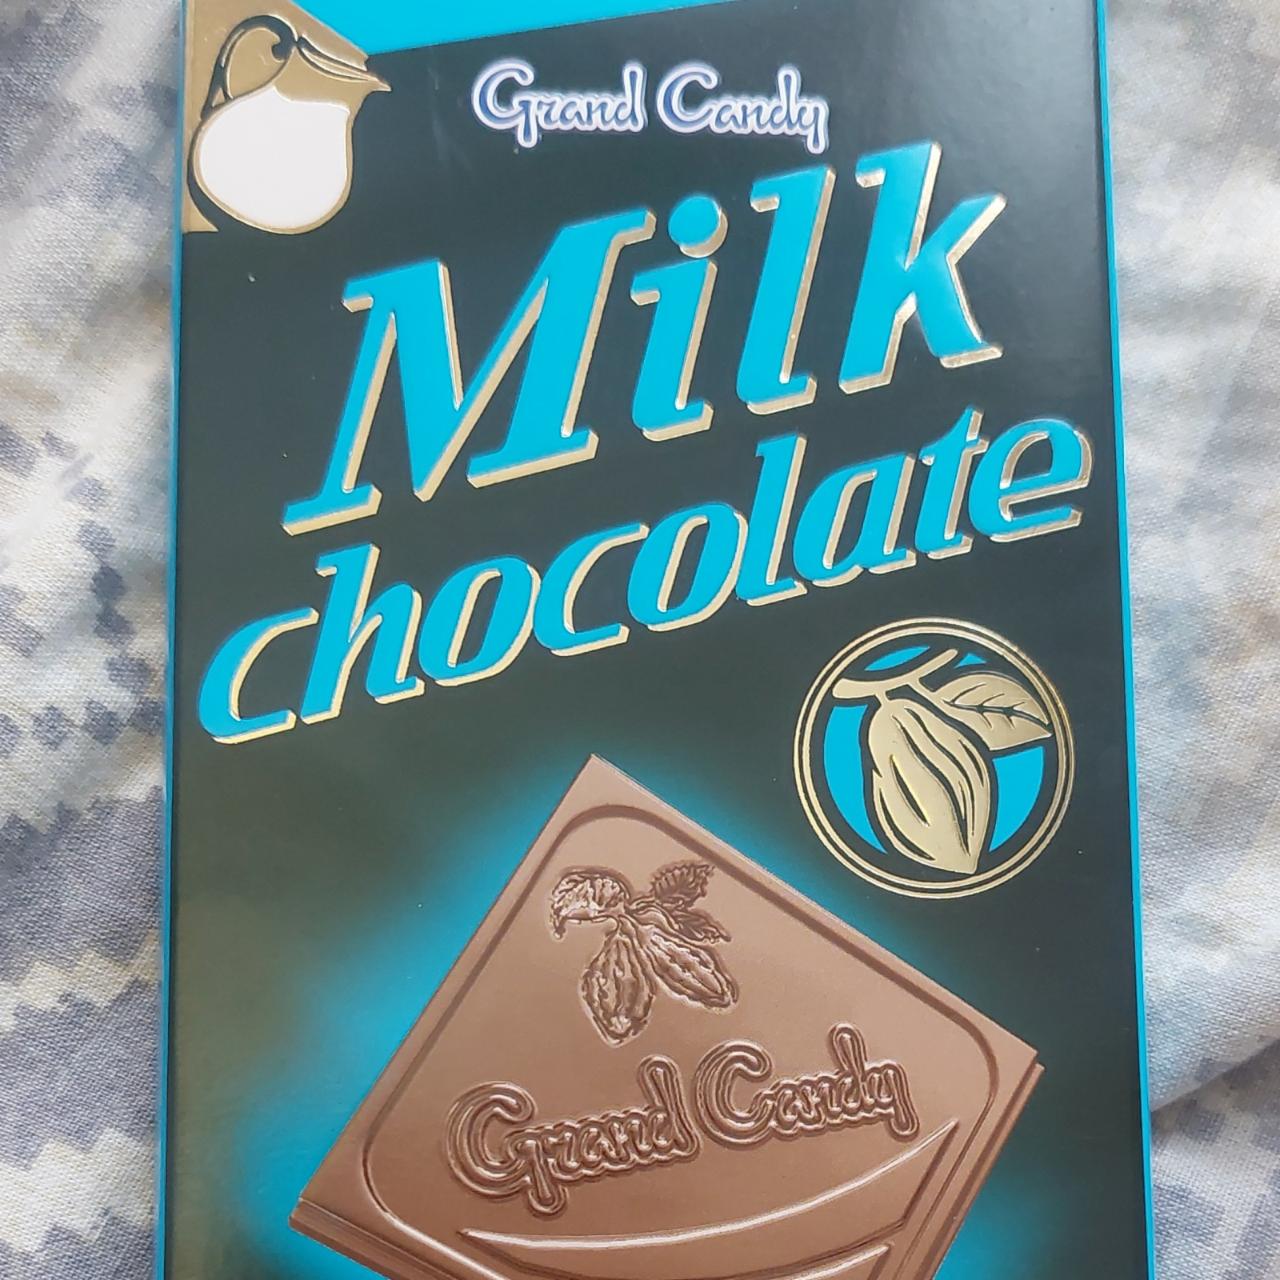 Фото - Milk chocolate Grand candy